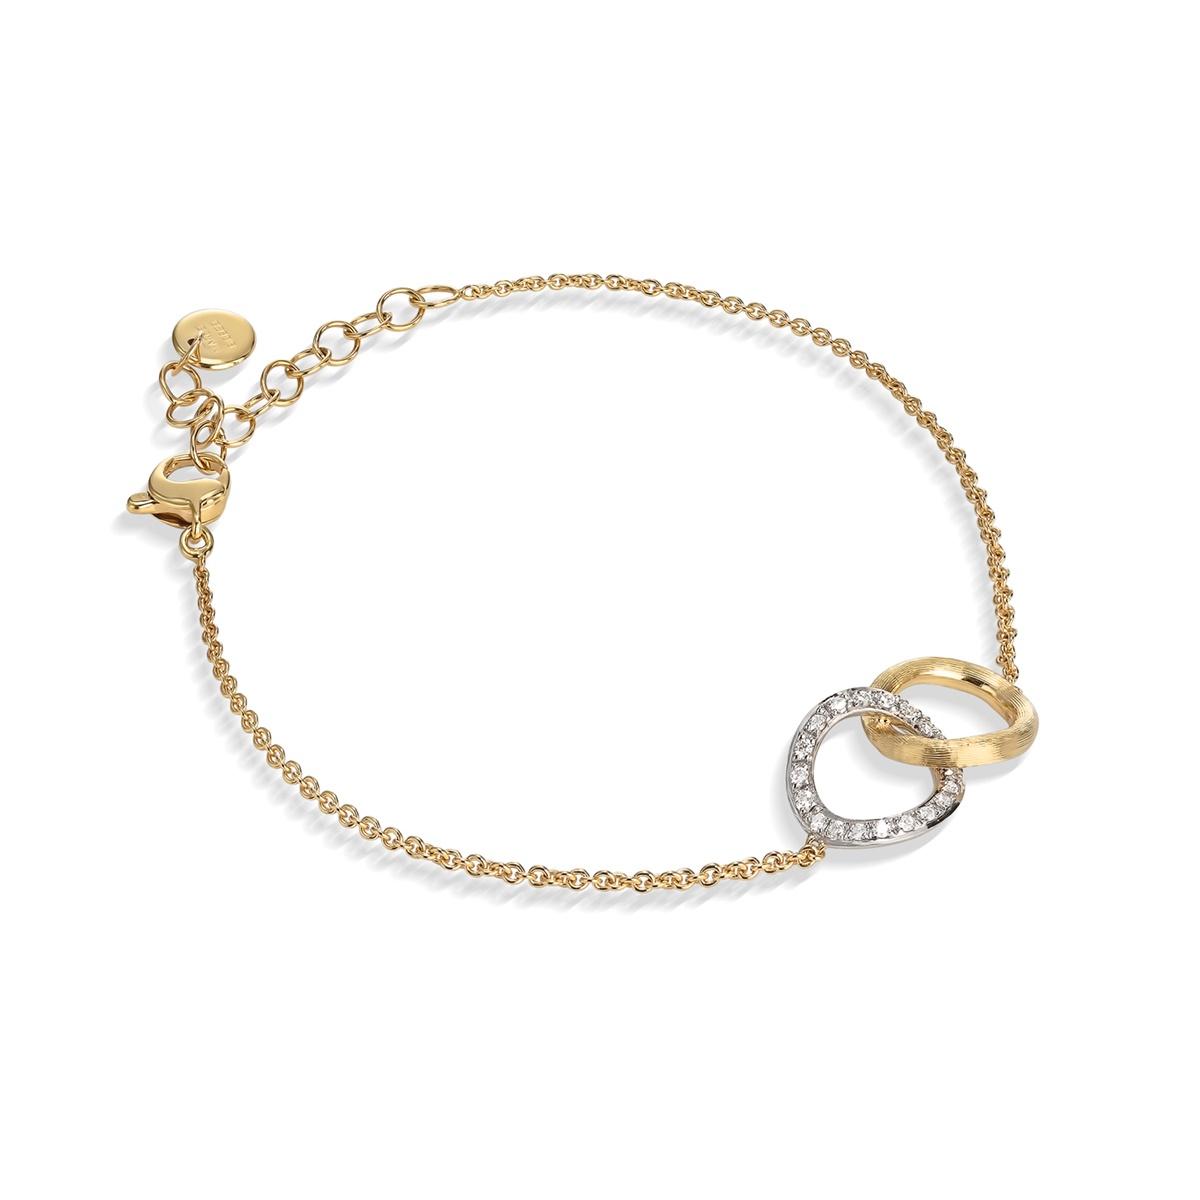 Marco Bicego Jaipur Collection 18K Yellow and White Gold Diamond Round Link Bracelet